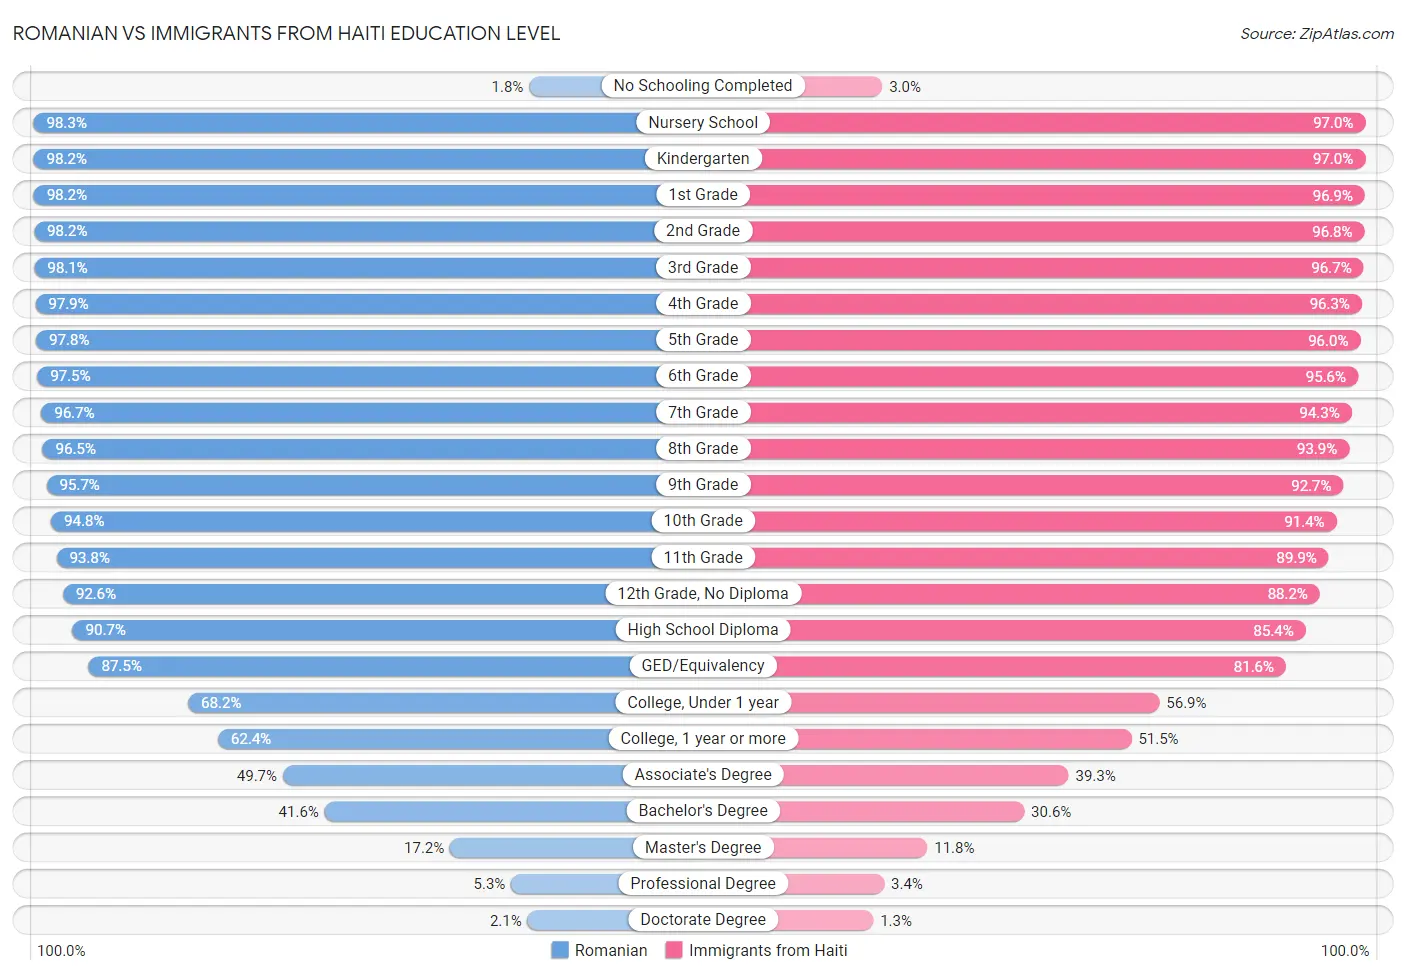 Romanian vs Immigrants from Haiti Education Level